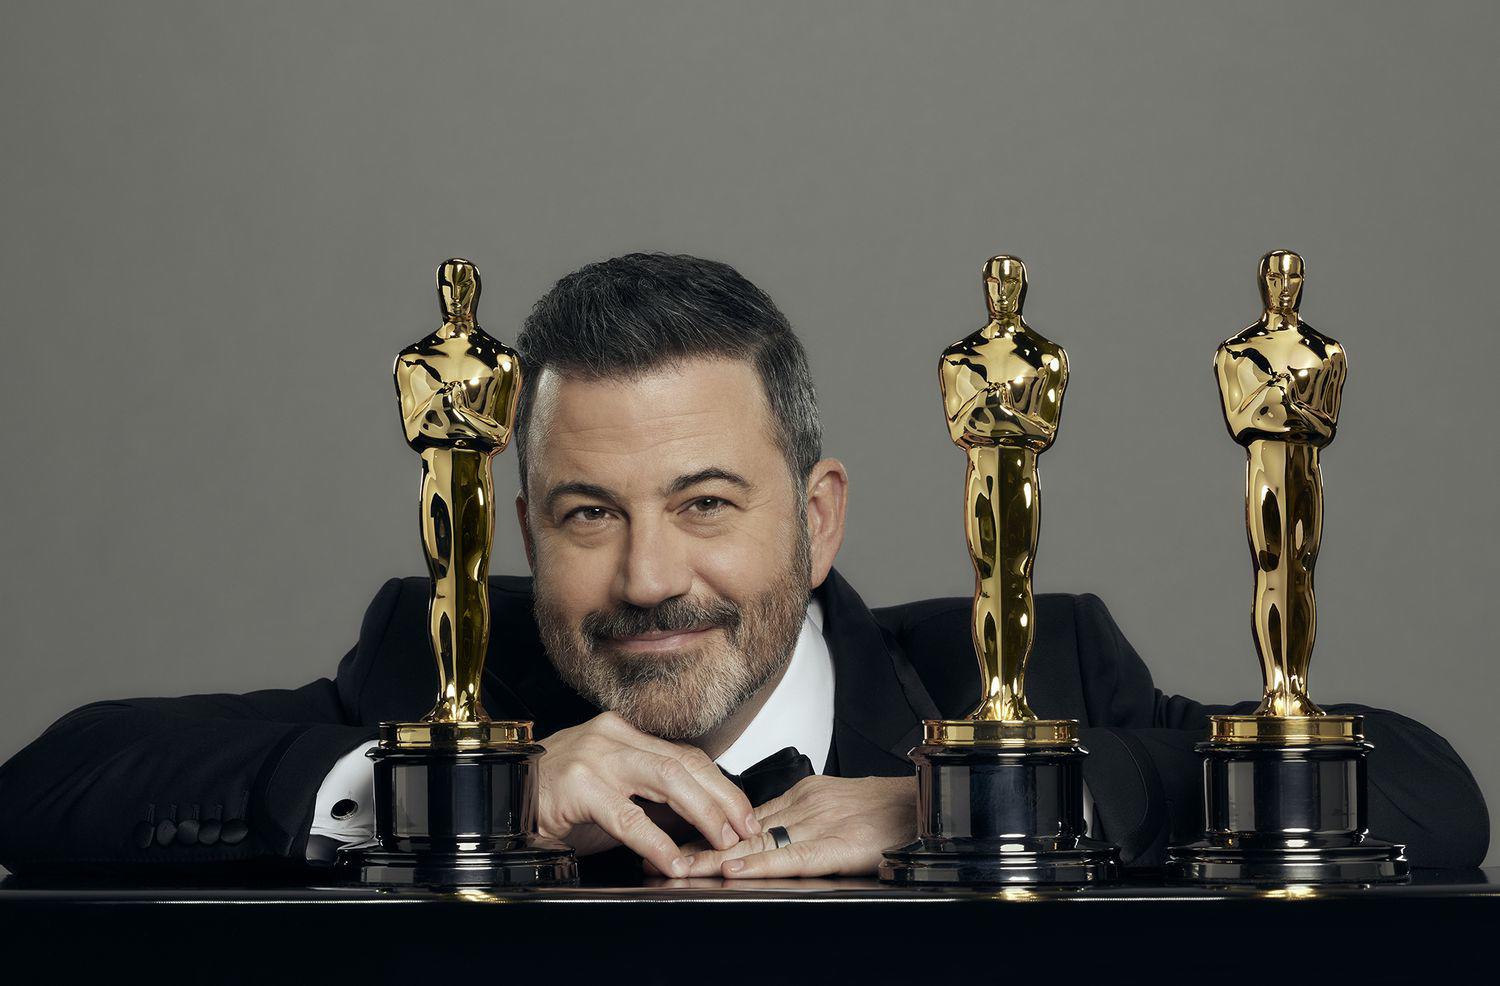 Señalan a Jimmy Kimmel por chiste sexista durante Premios Óscar. Noticias en tiempo real